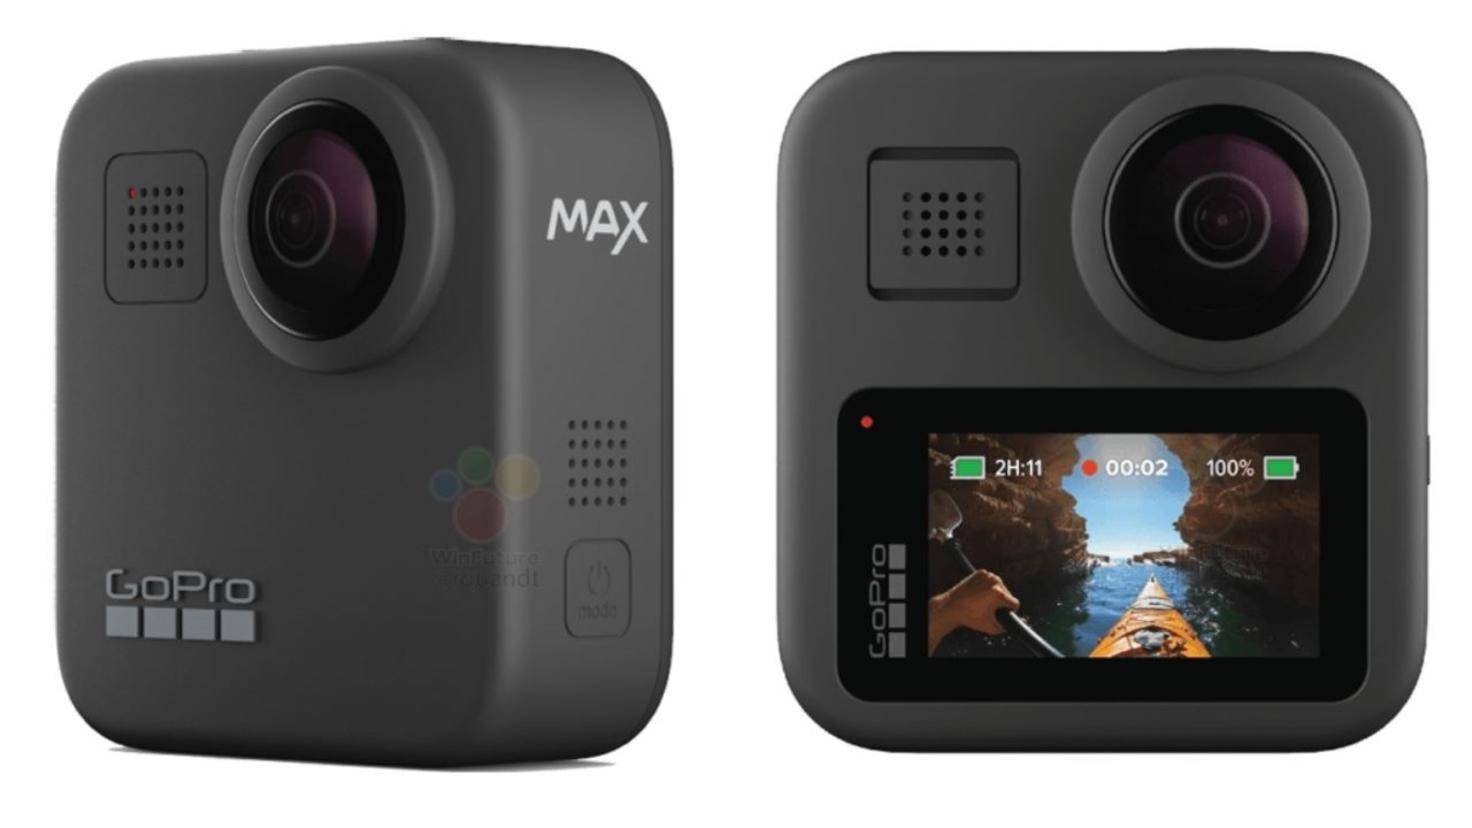 GoPro Max 360 degree camera